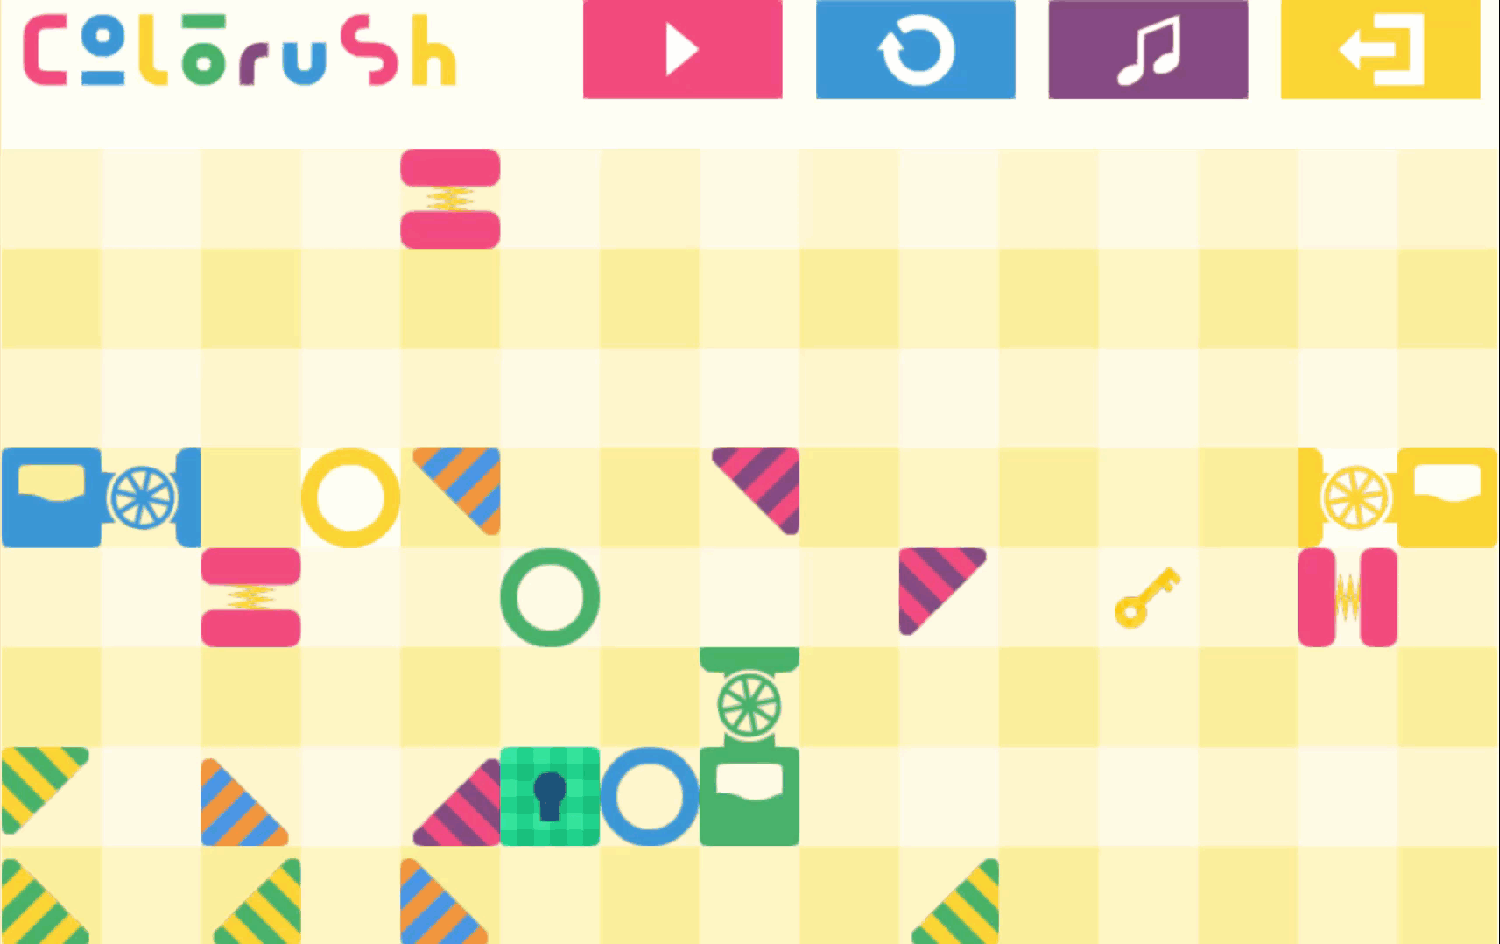 Colorush Game Level 19 Screenshot.